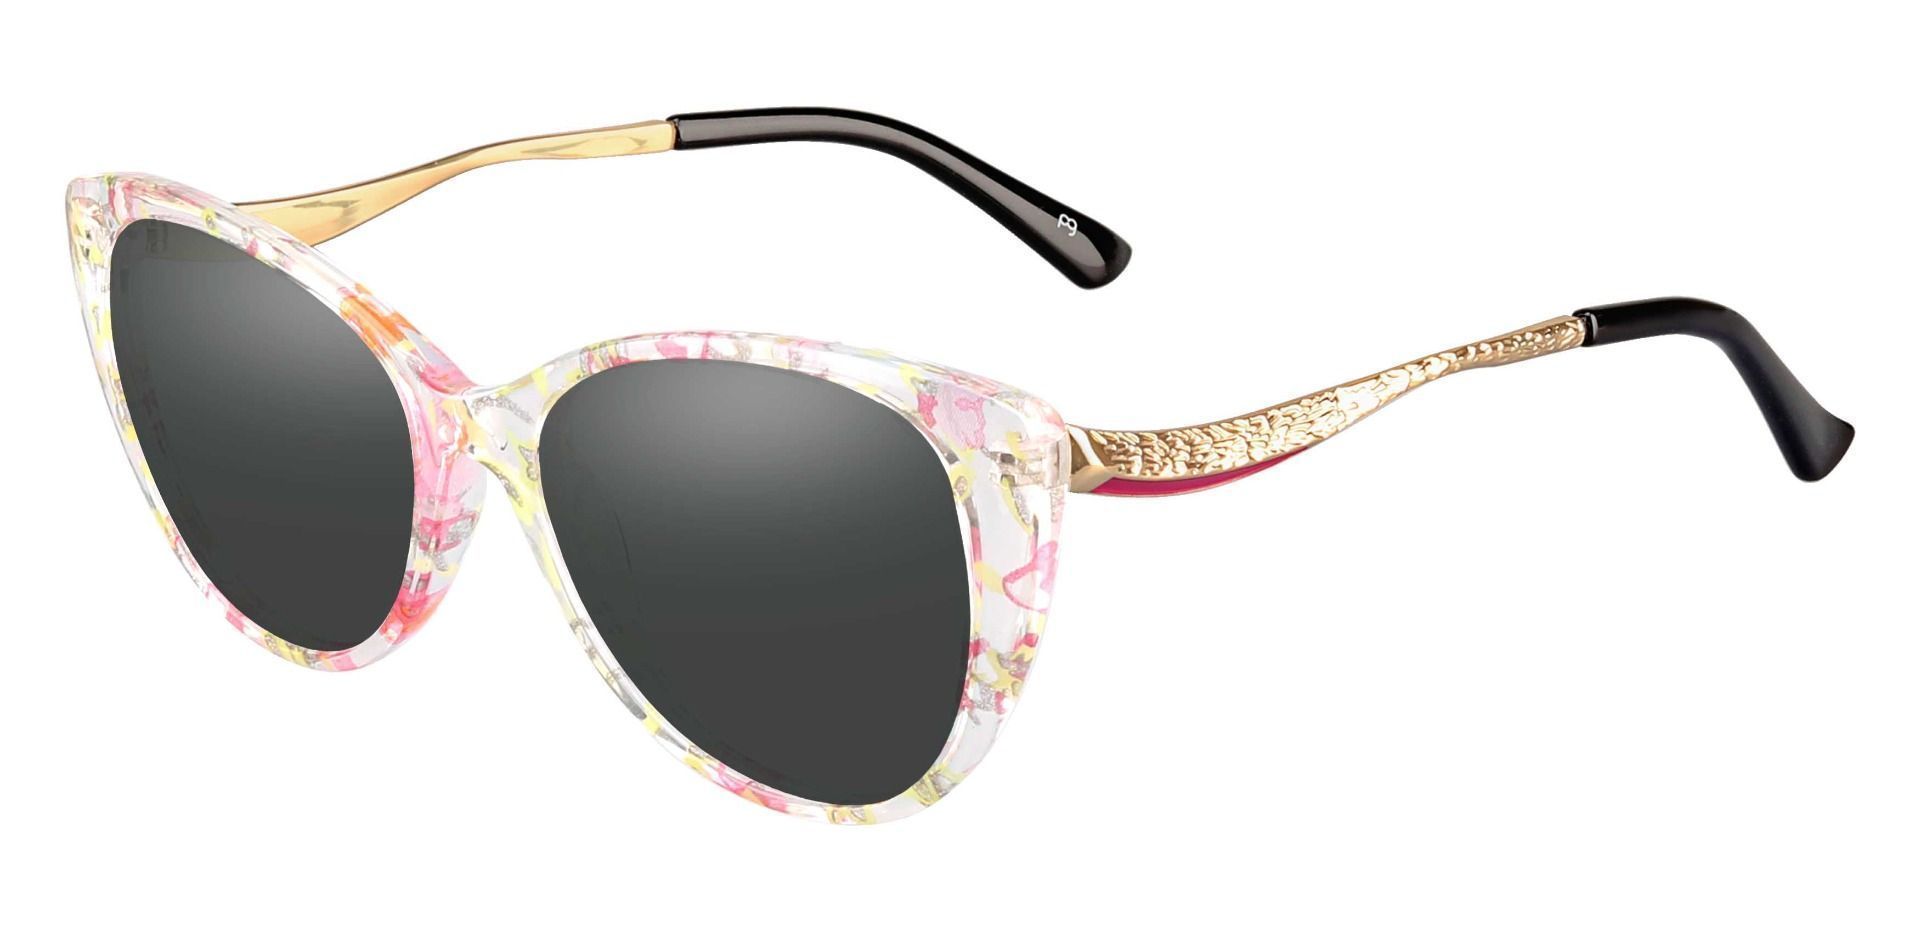 Roma Cat Eye Prescription Sunglasses - Floral Frame With Gray Lenses